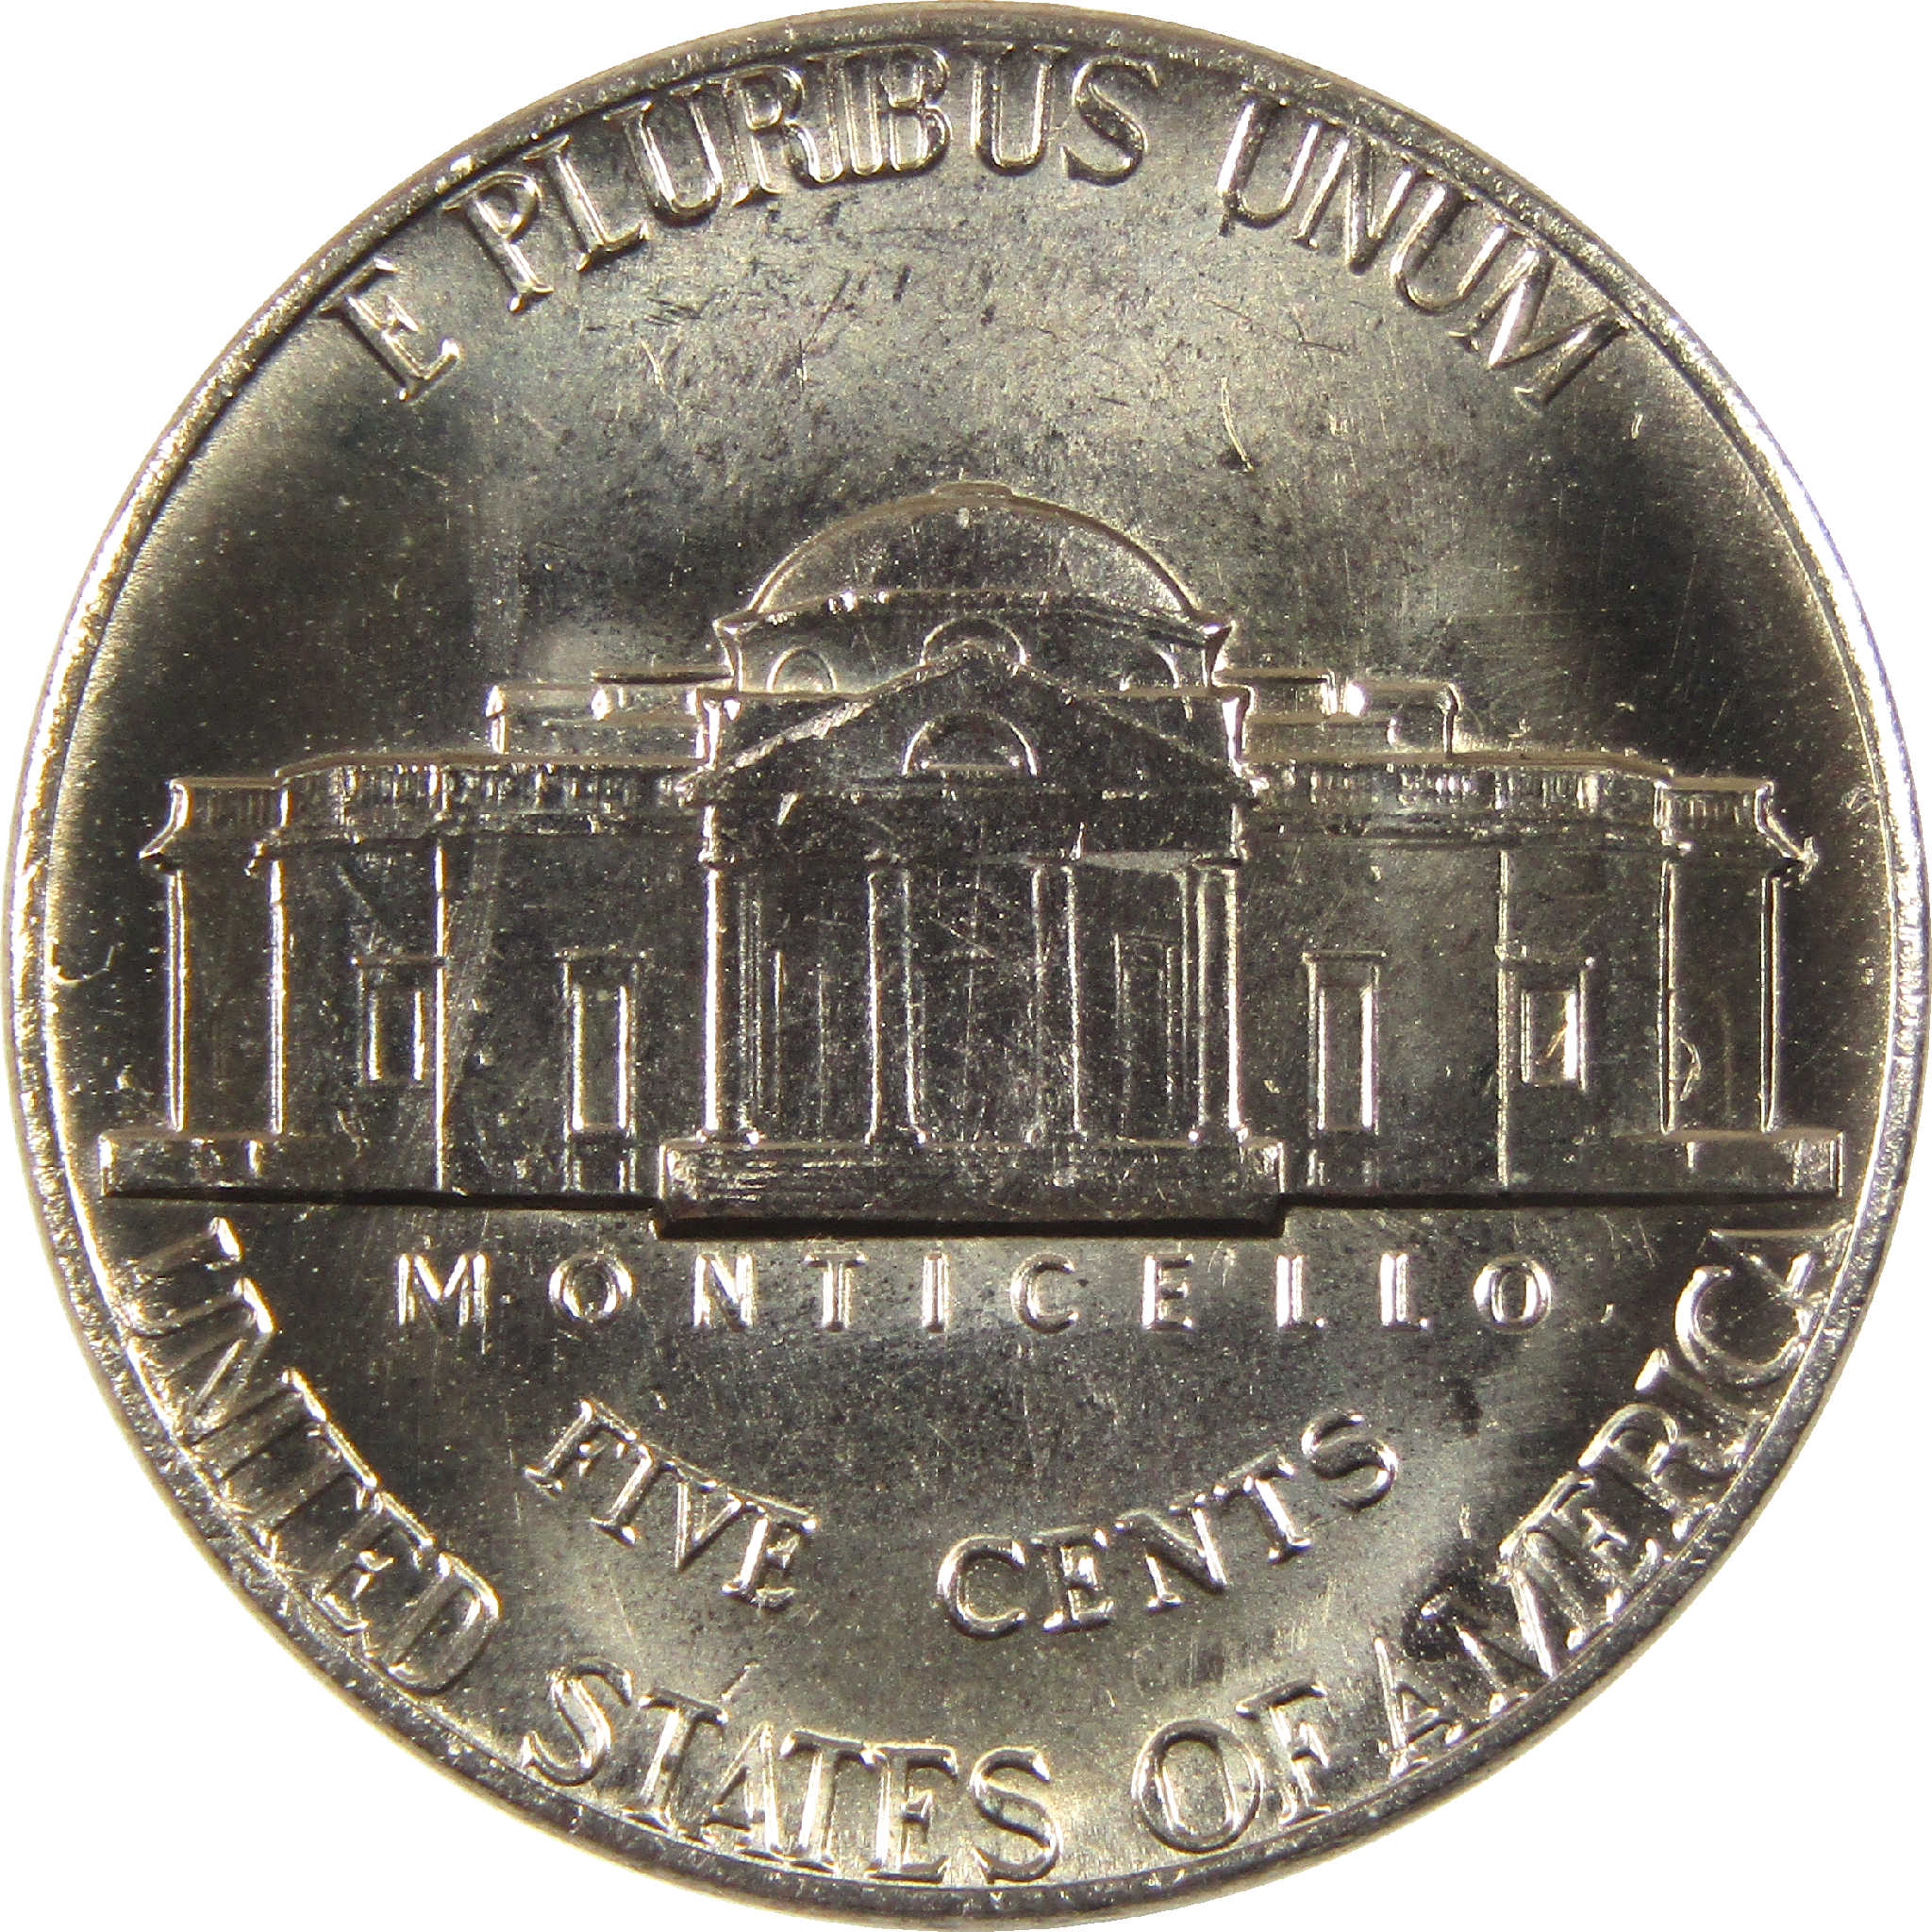 1975 D Jefferson Nickel BU Uncirculated 5c Coin